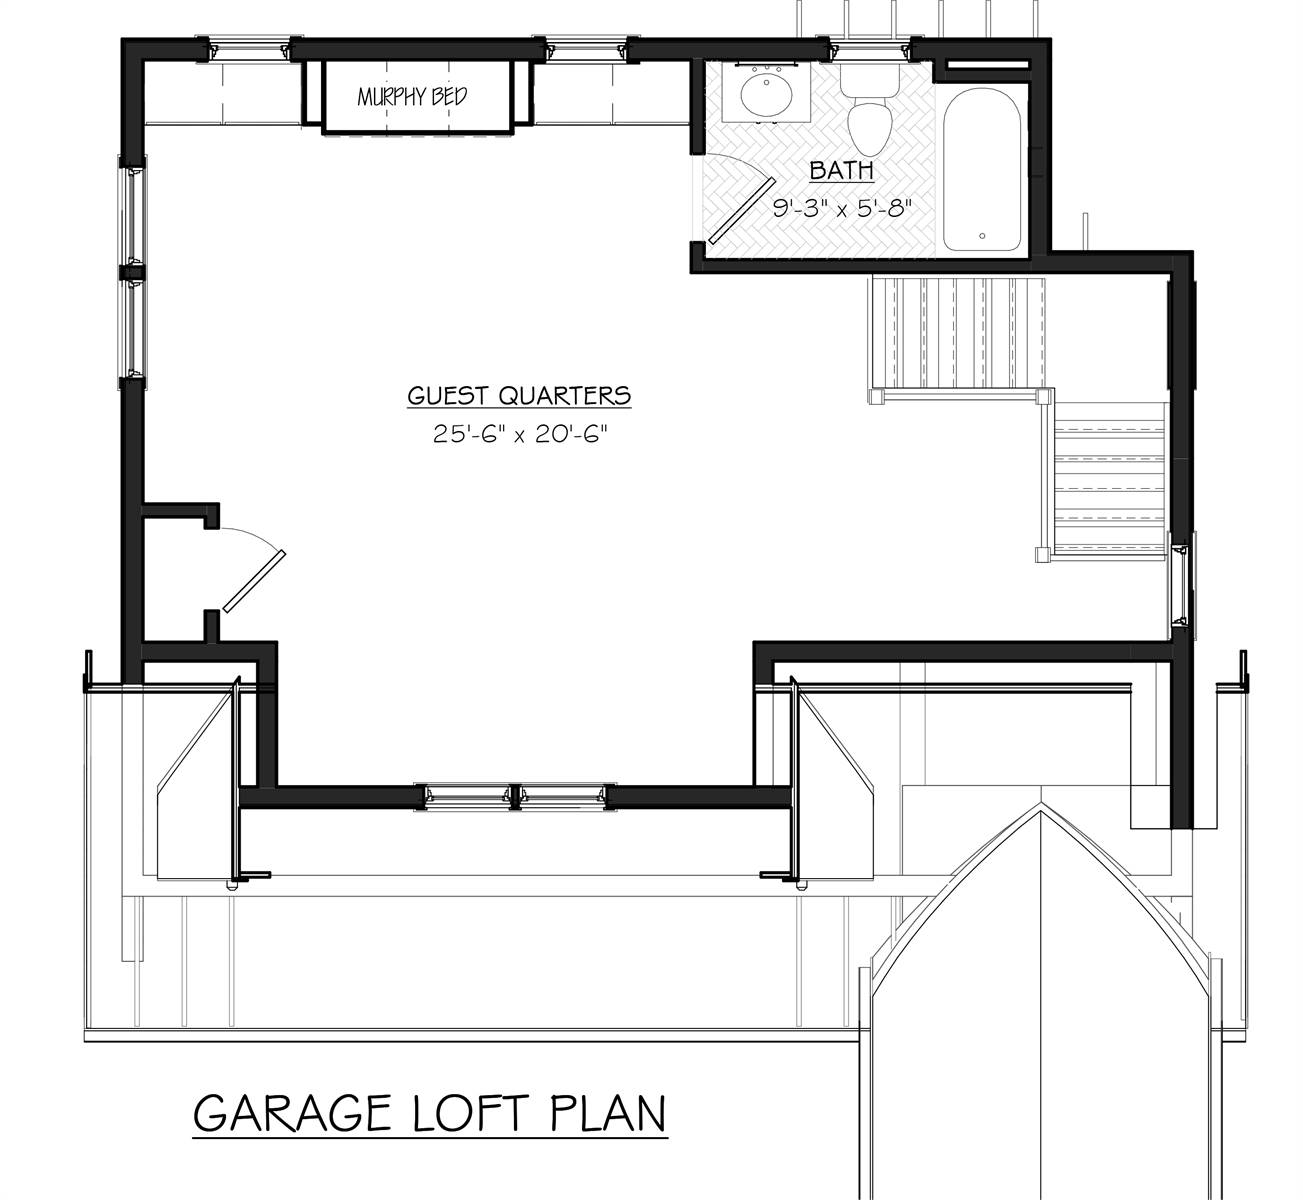 Garage Loft Floor Plan